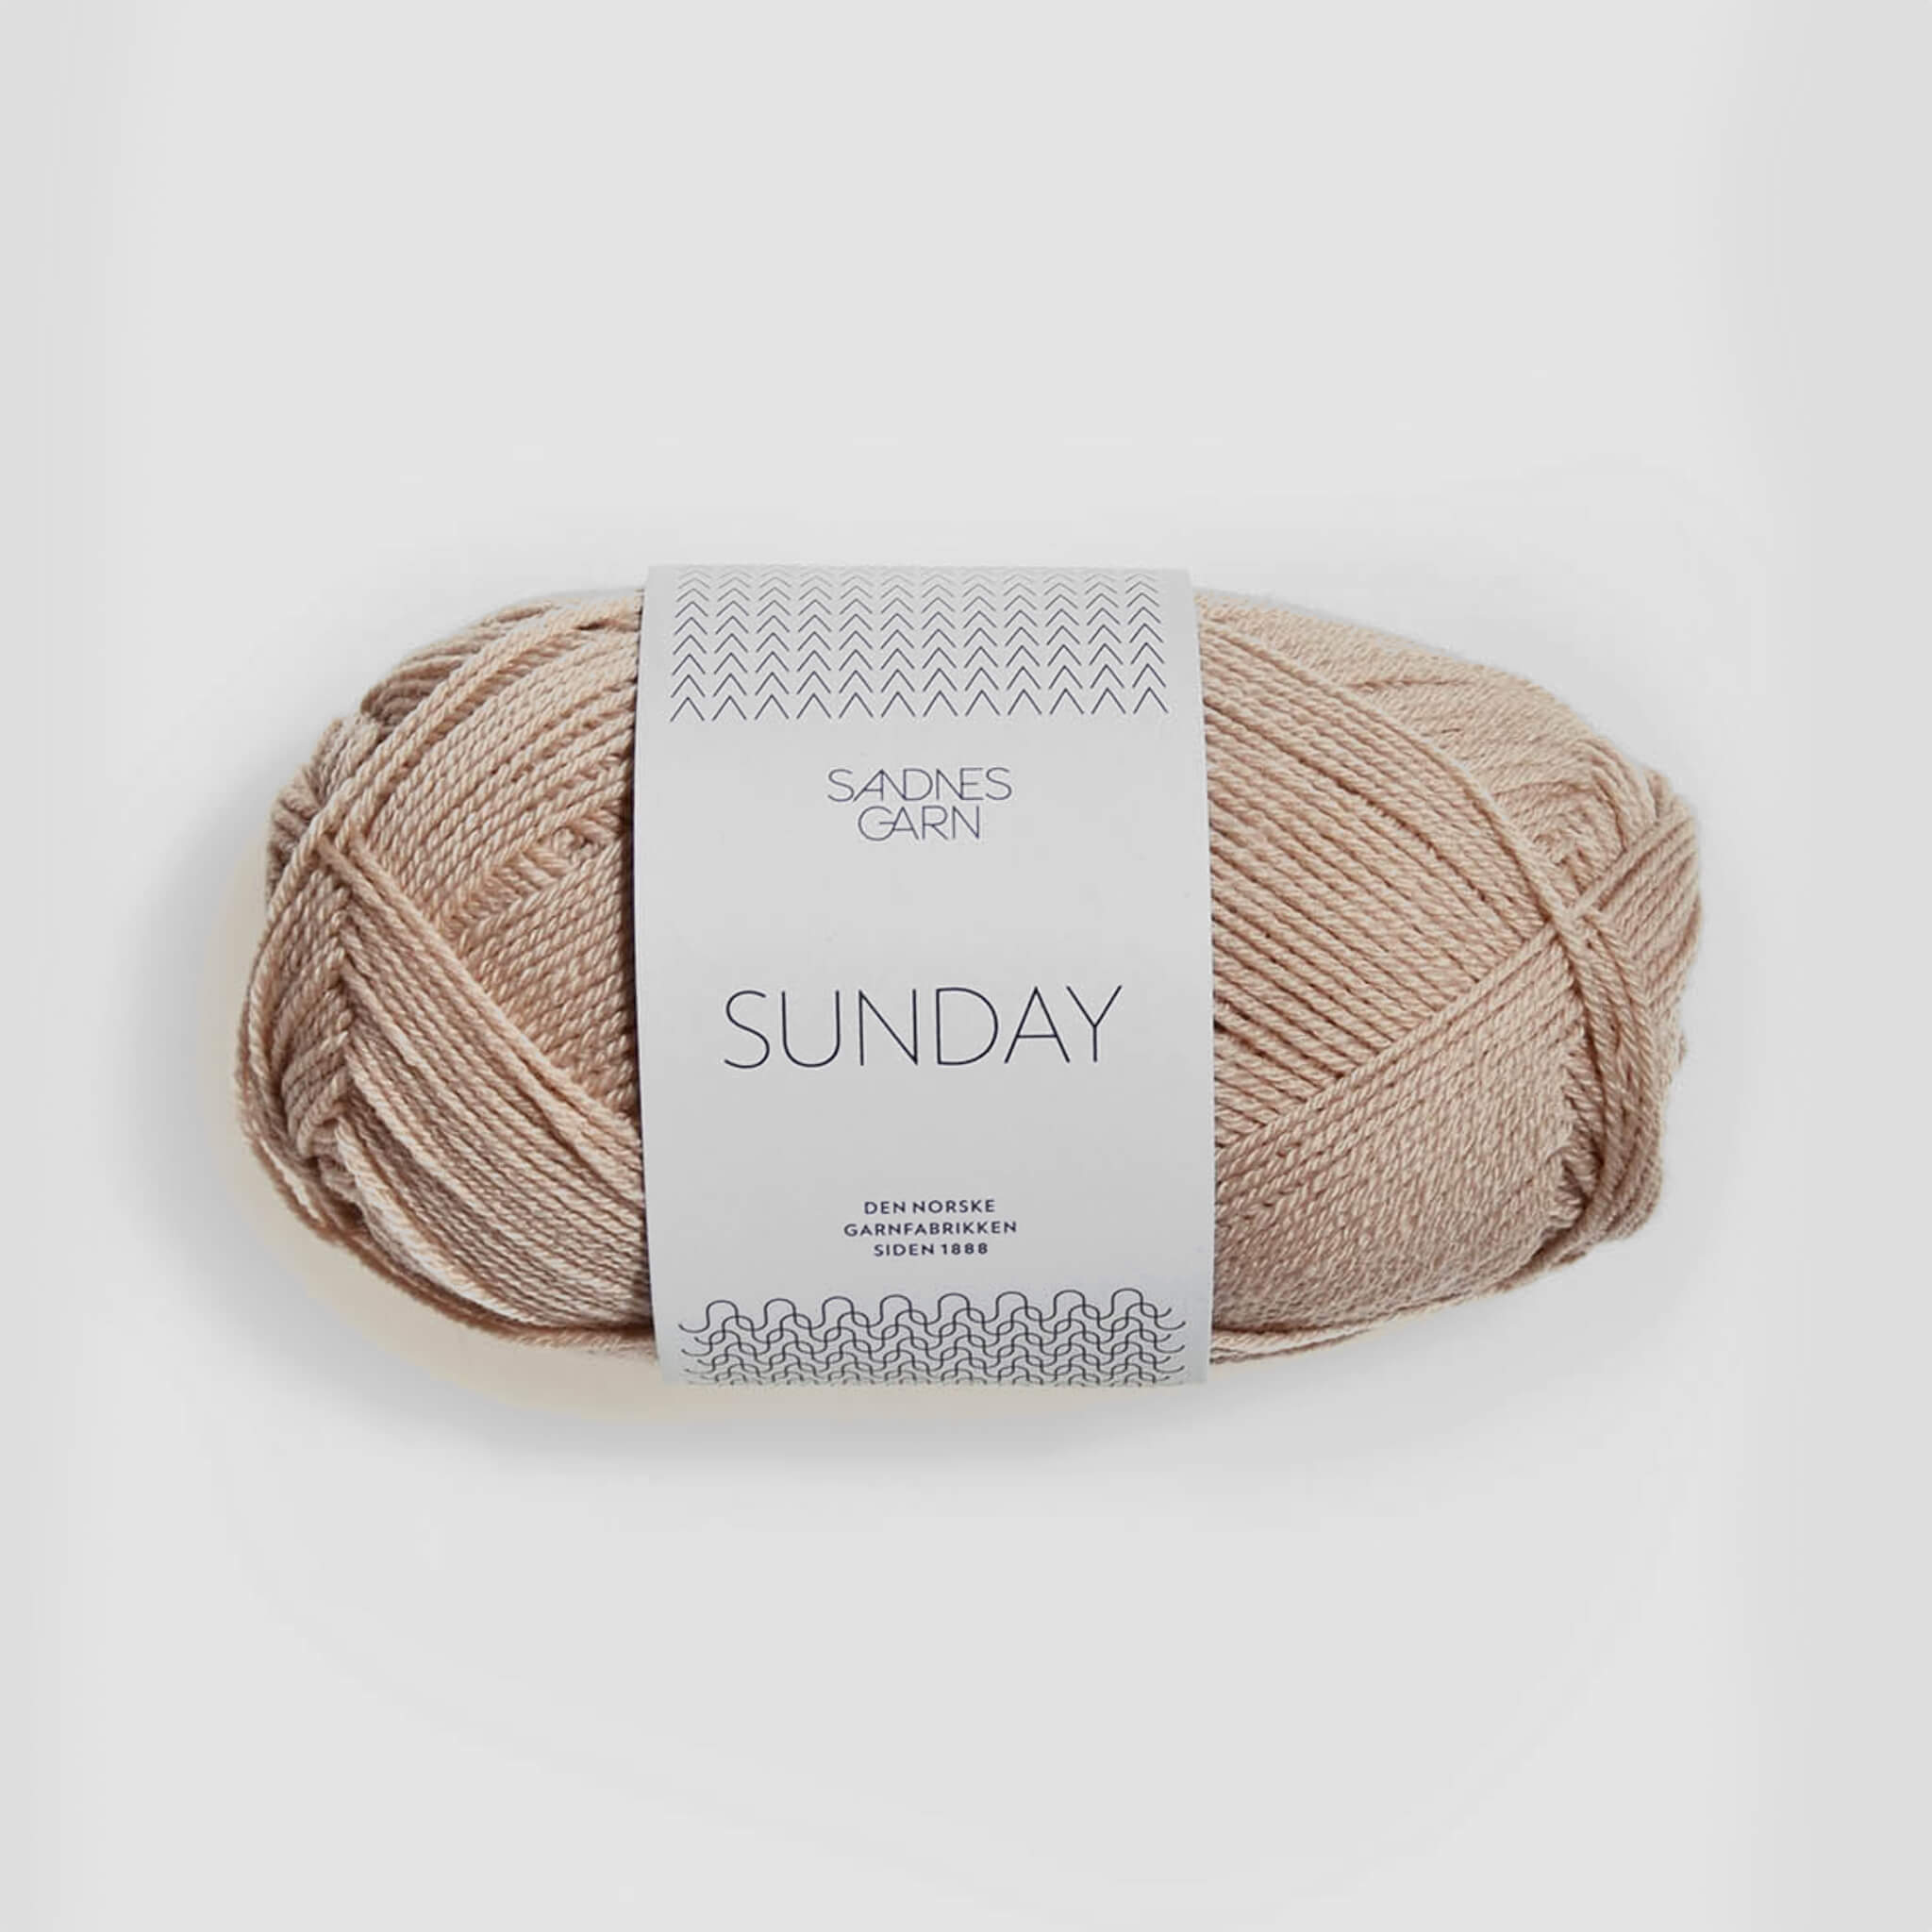 Sandnes Sunday (Find billigste pris) Knitmade